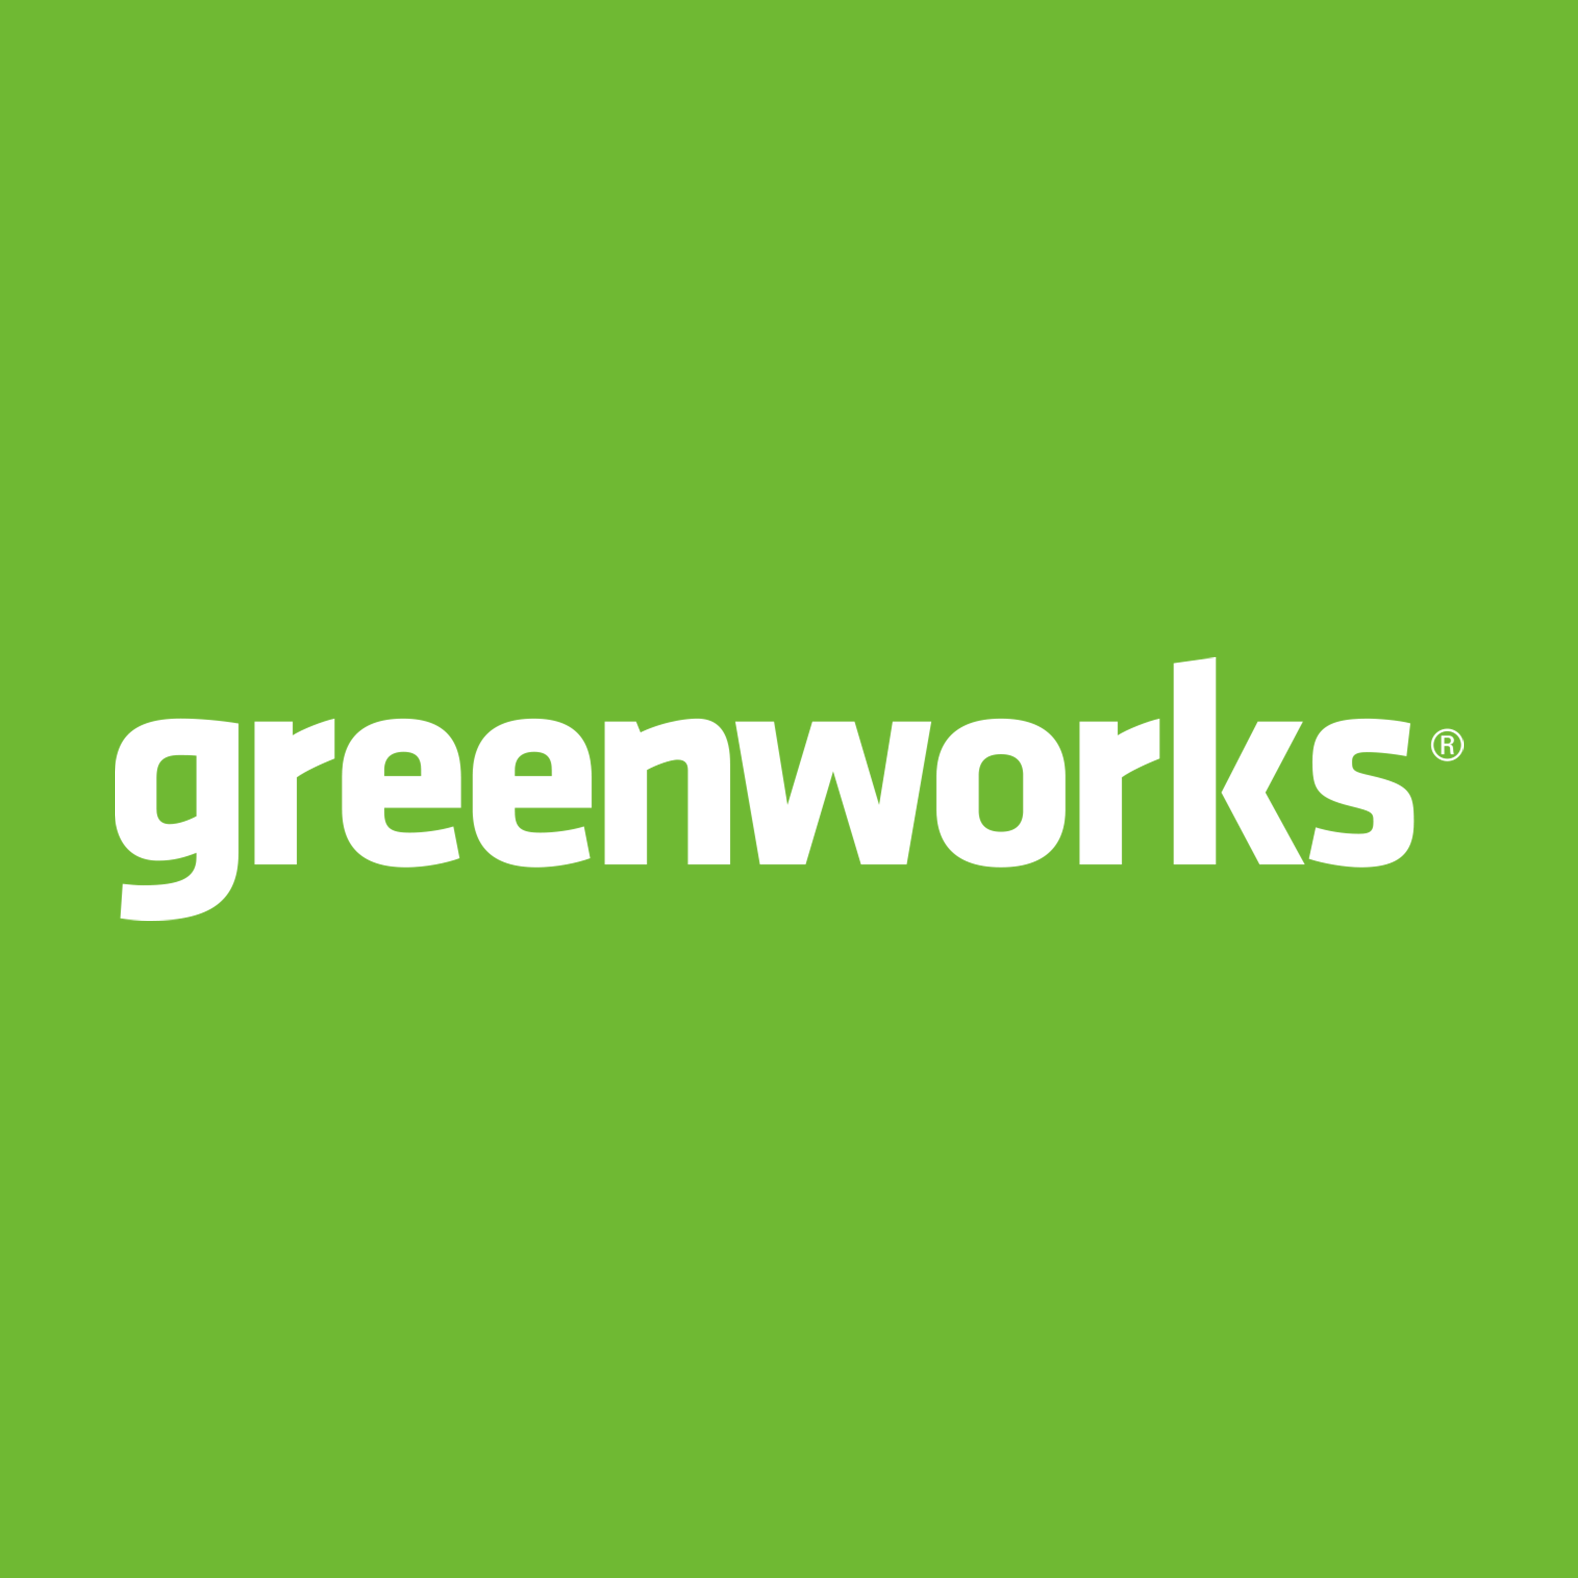 Greenworks Logo - Amazon.co.uk: Greenworks